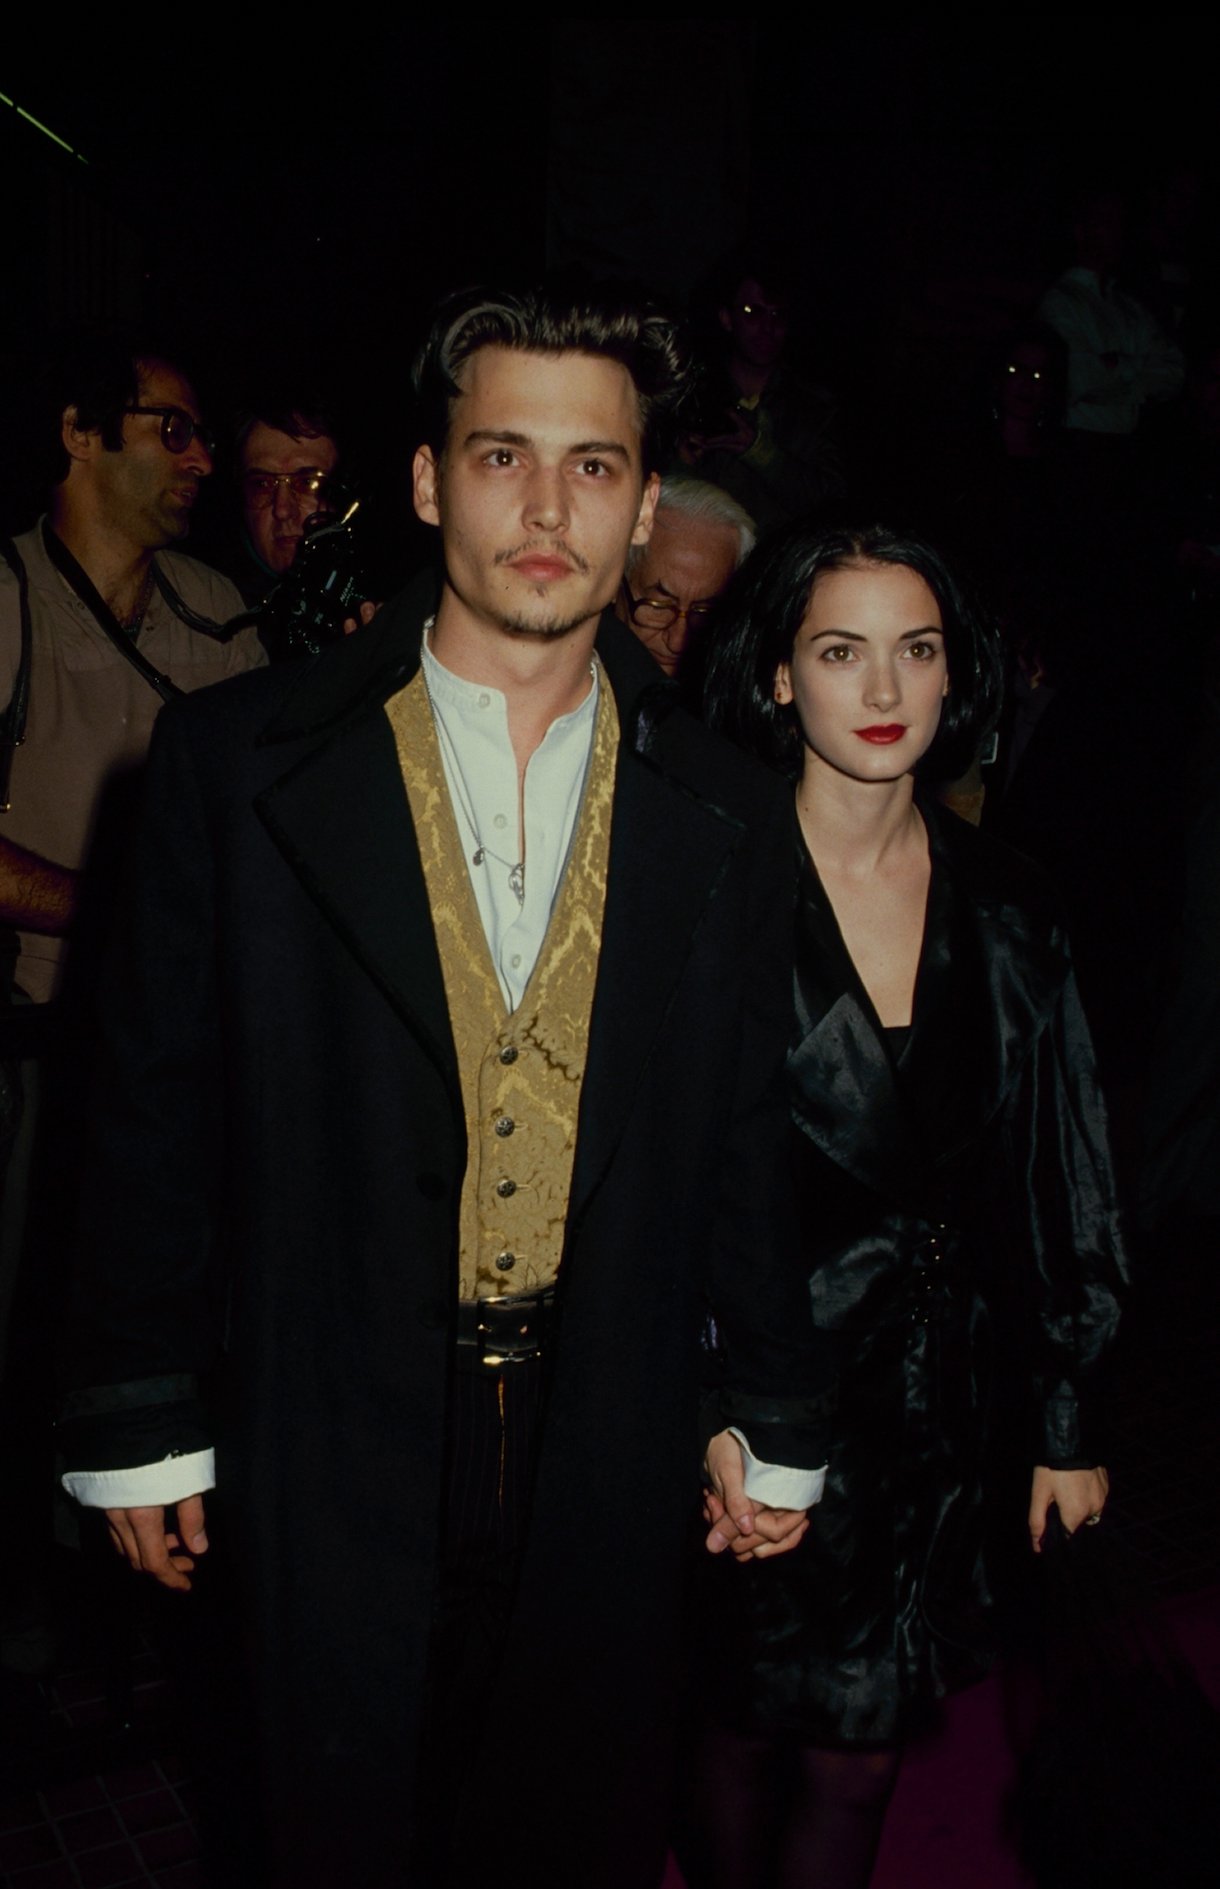 Winona Ryder with her boyfriend, actor Johnny Depp, circa 1990